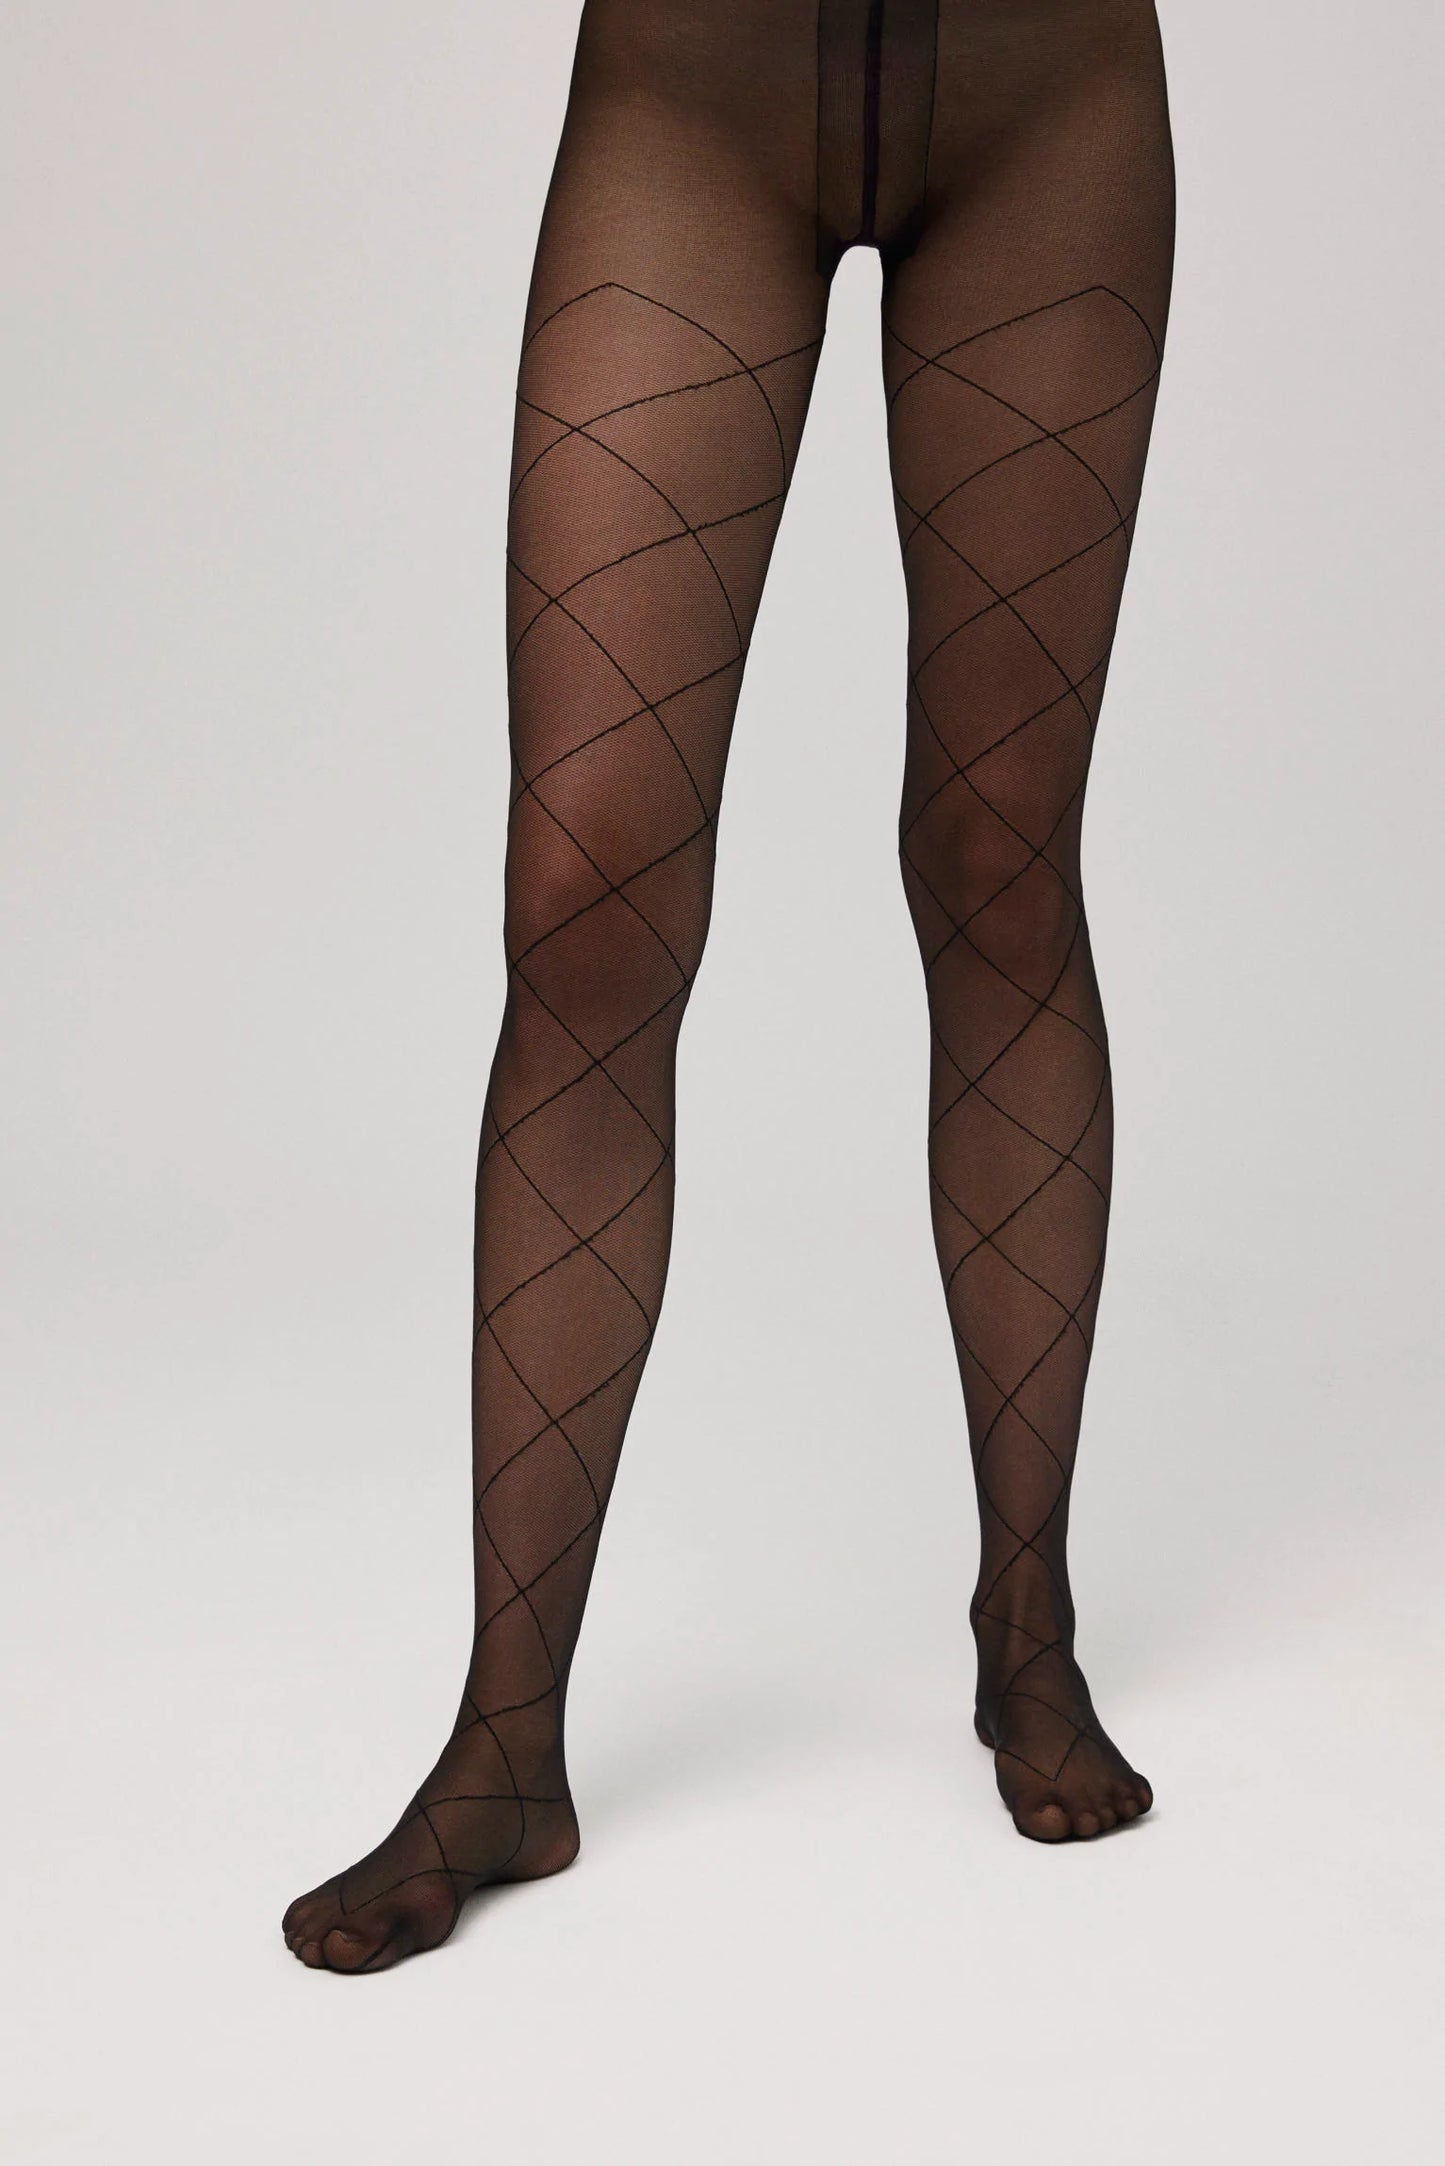 Ysabel Mora 16005 Diamond Tights - Sheer black micro mesh style fashion tights with a woven diamond pattern.